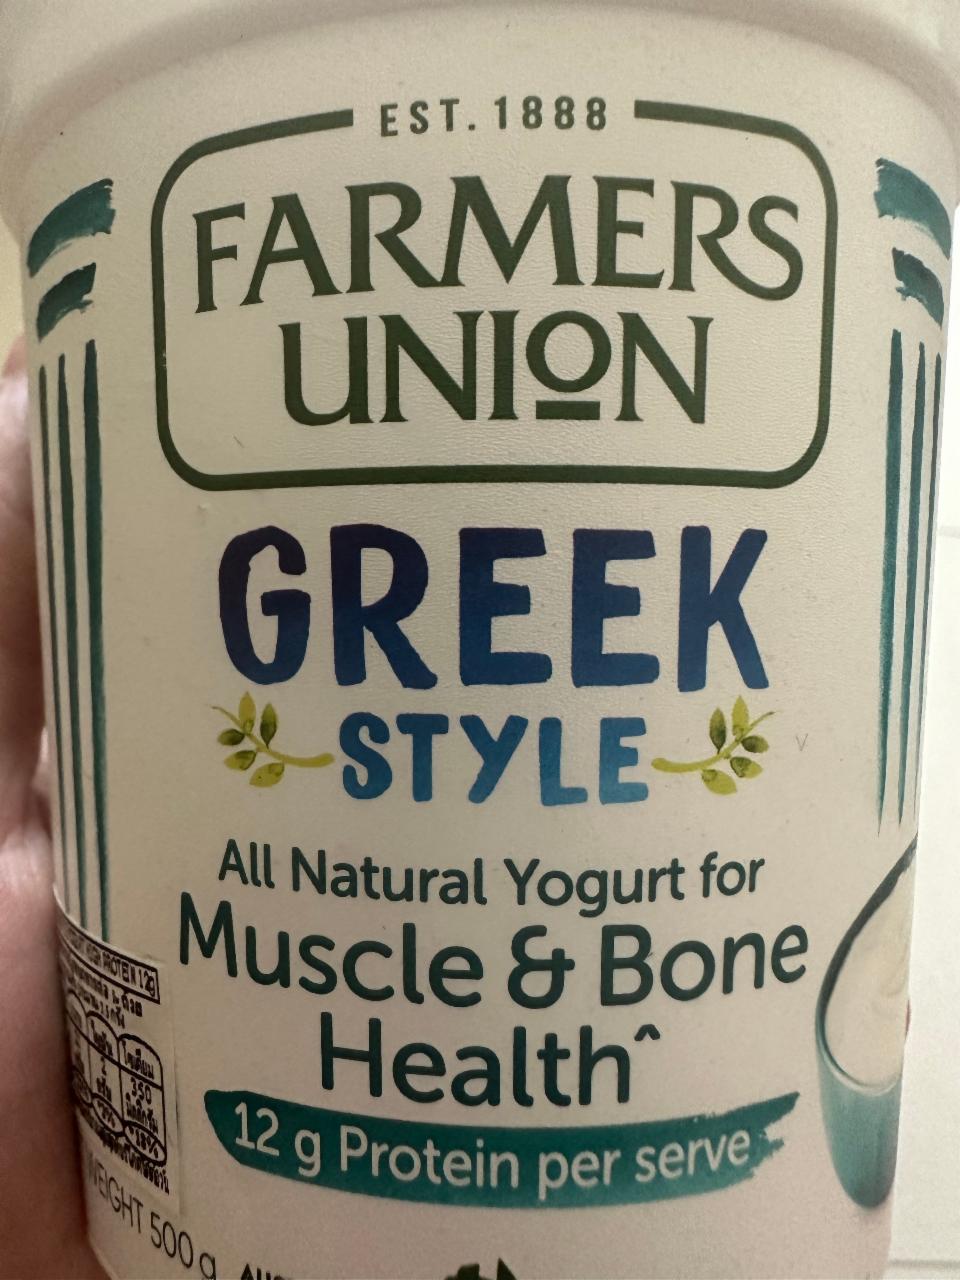 Fotografie - Greek Style Yoghurt 12 g protein Farmers Union